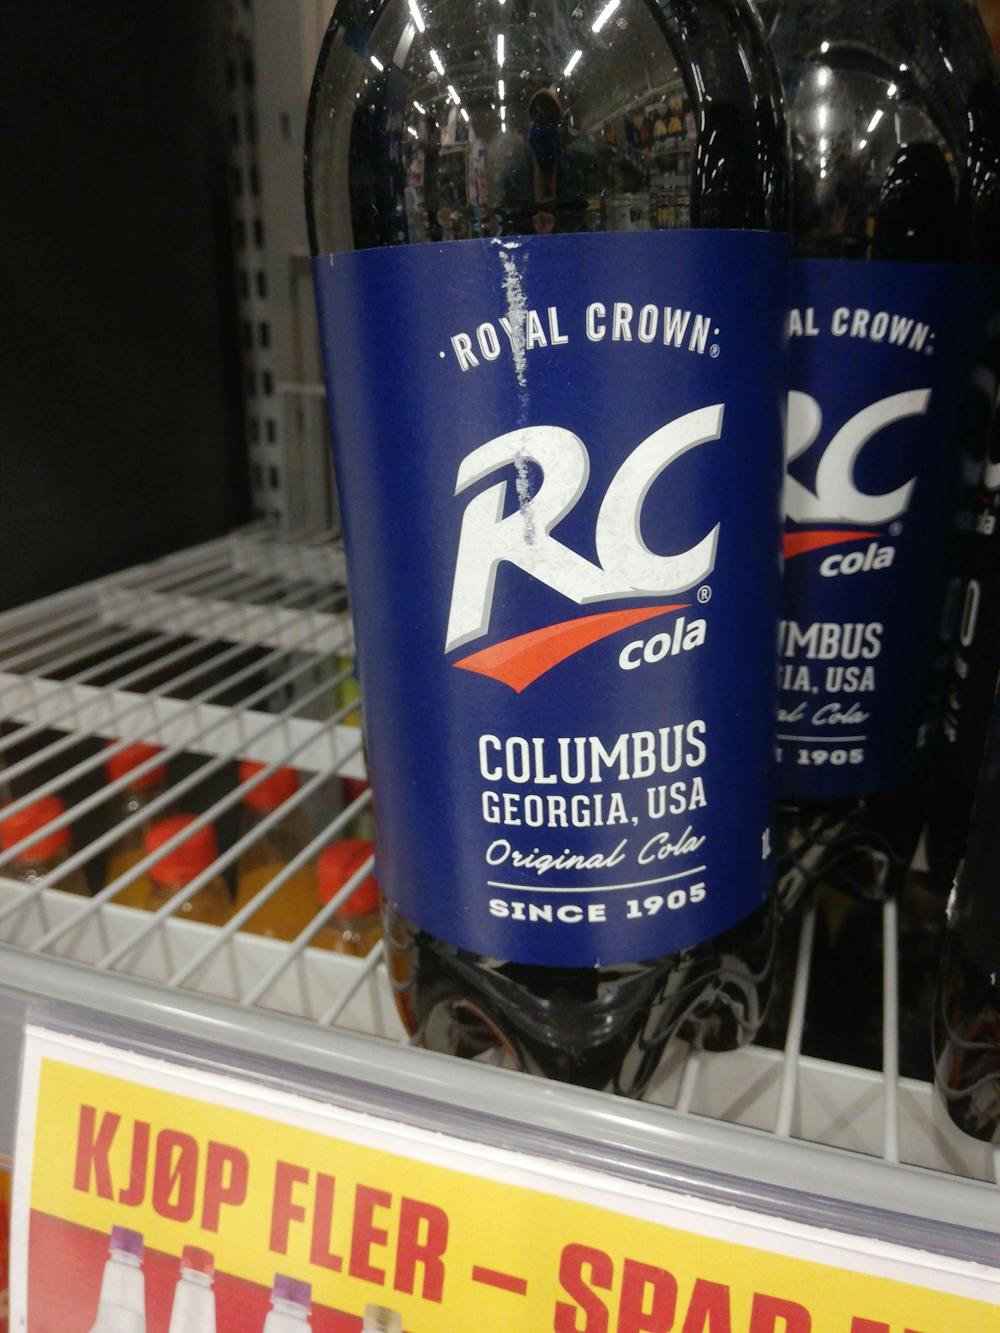 RC cola, Royal crown